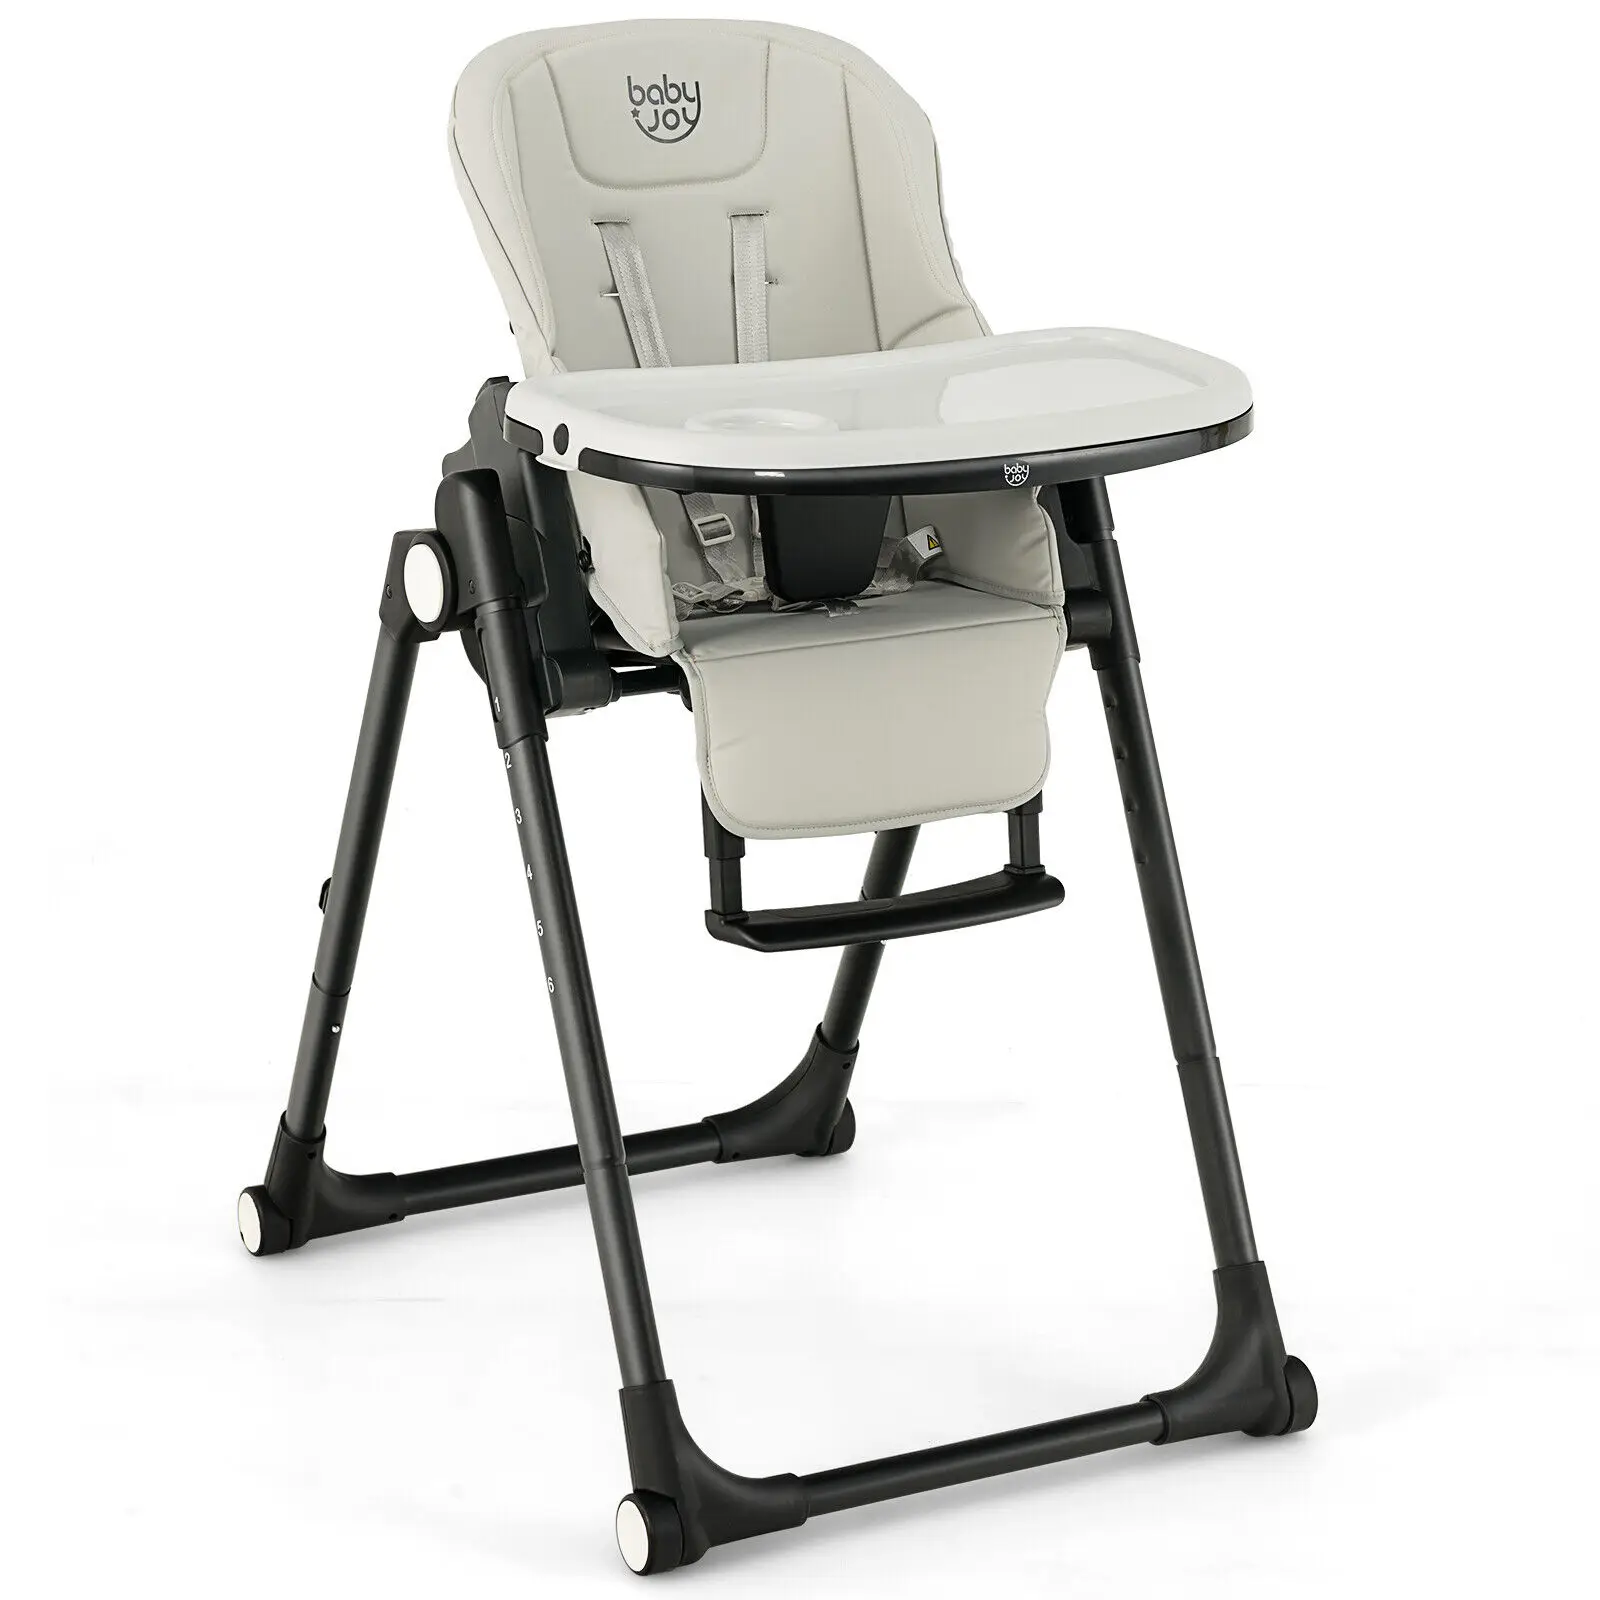 Babjoy 4-in-1 Foldable Baby High Chair Height Adjustable Feeding Chair w/ Wheels Grey